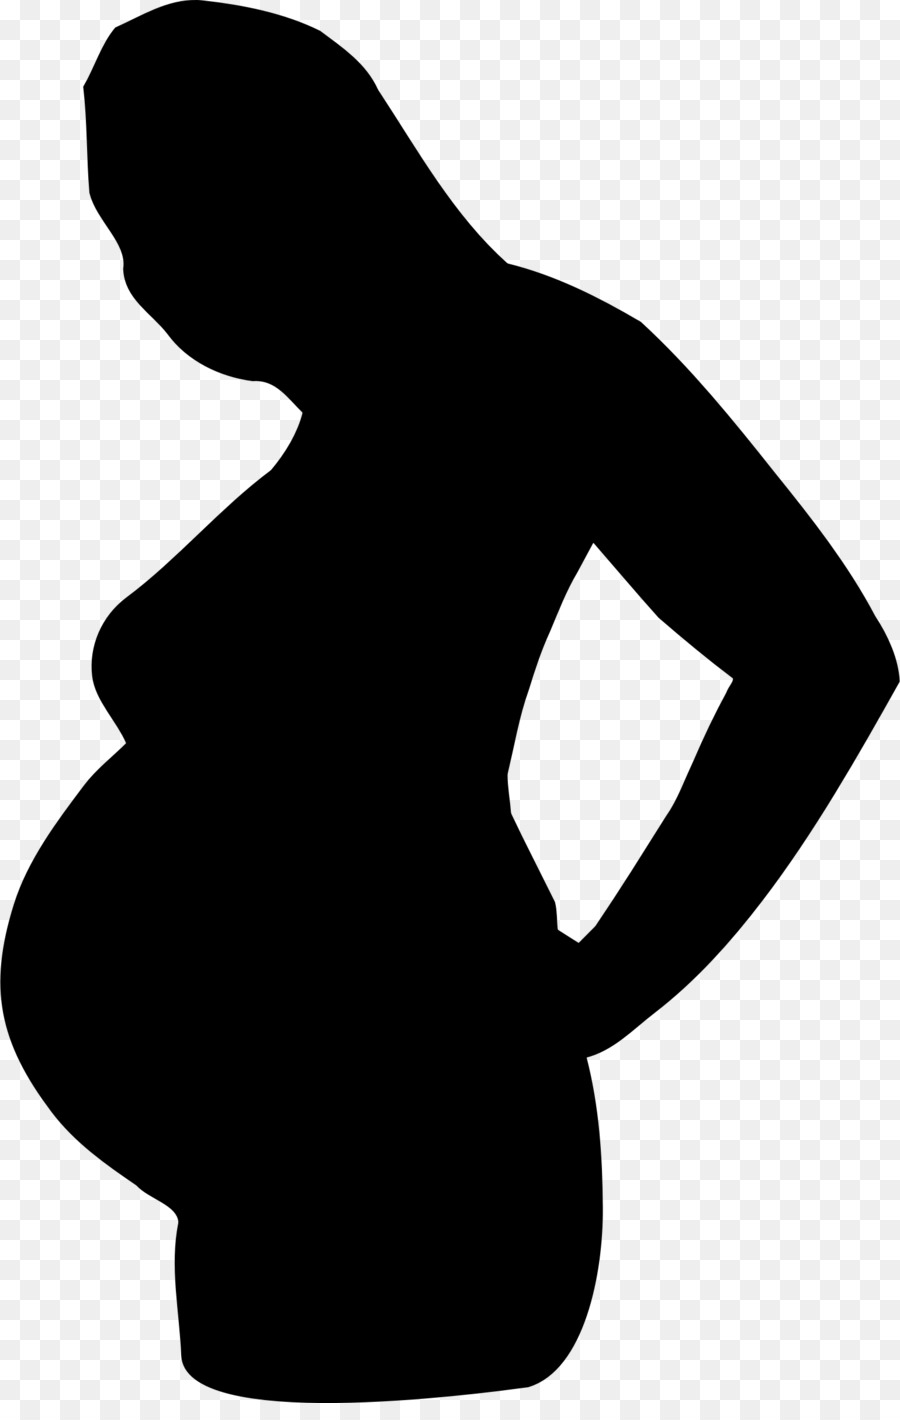 Pregnancy Fetal Alcohol Syndrome Mother Clip art - pregnancy png download - 1540*2400 - Free Transparent Pregnancy png Download.